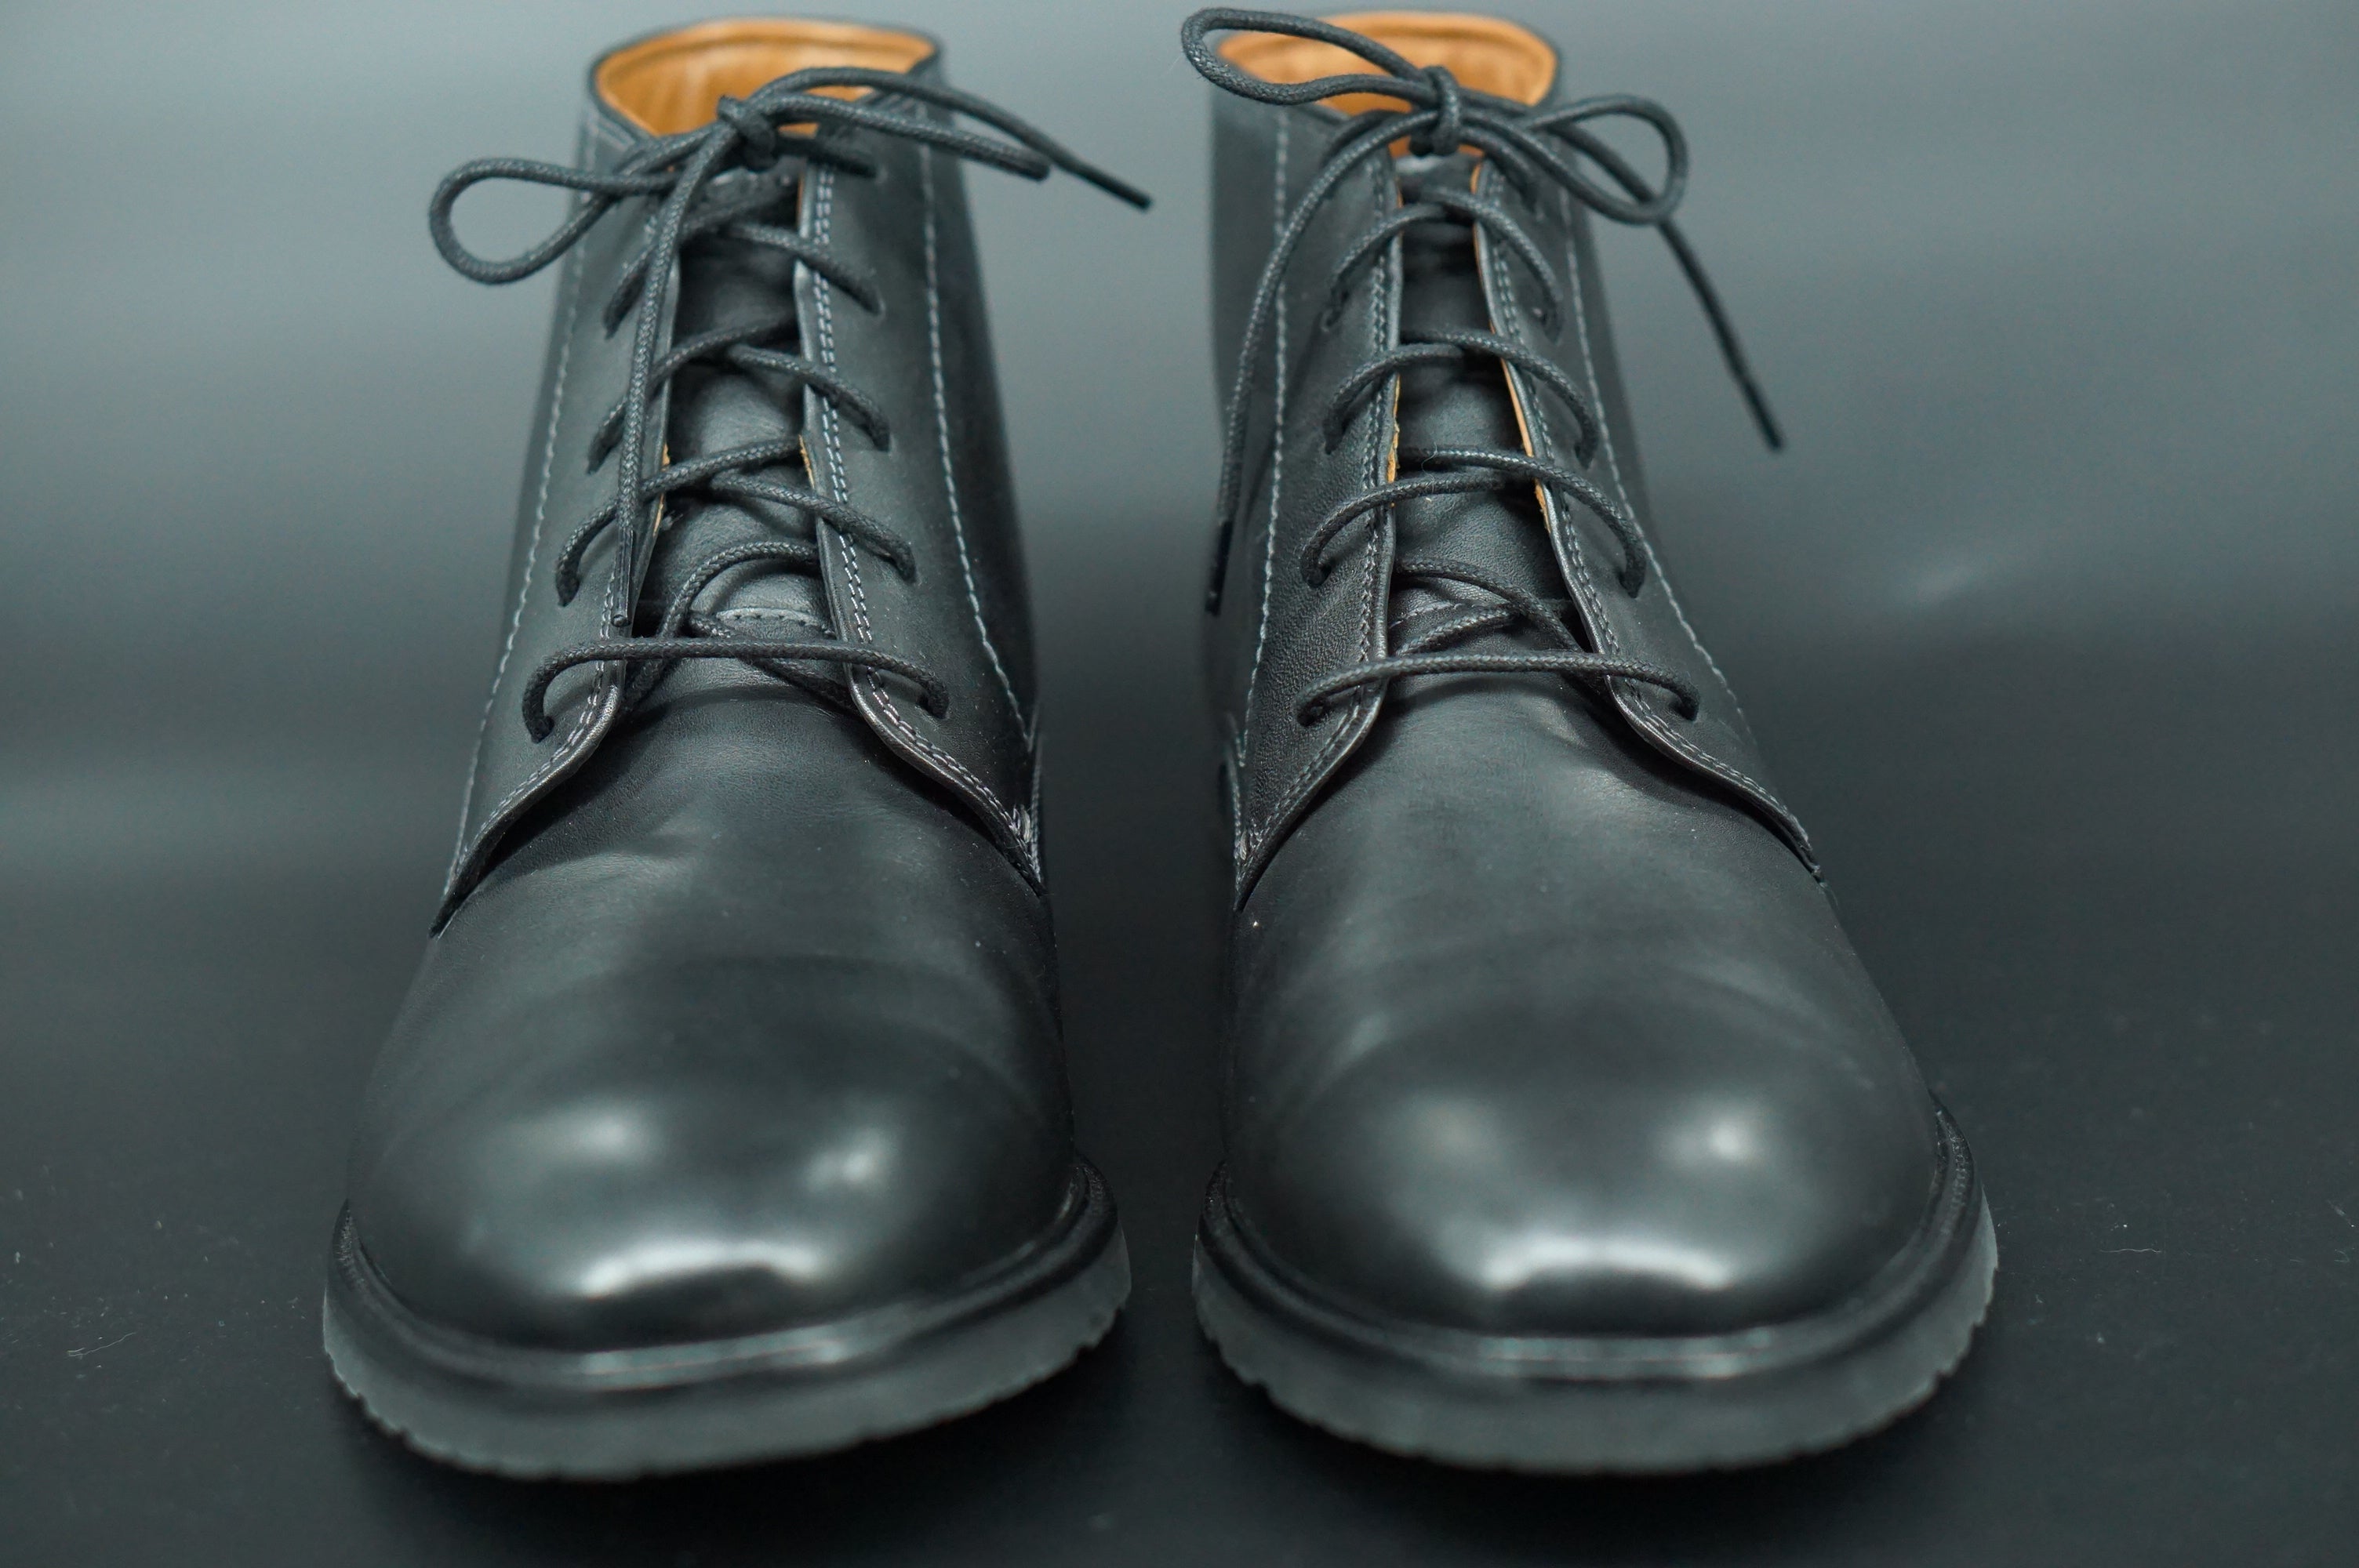 Cole Haan Warner Grandpro Waterproof Chukka Boot Black Leather SZ 11 New Lace Up